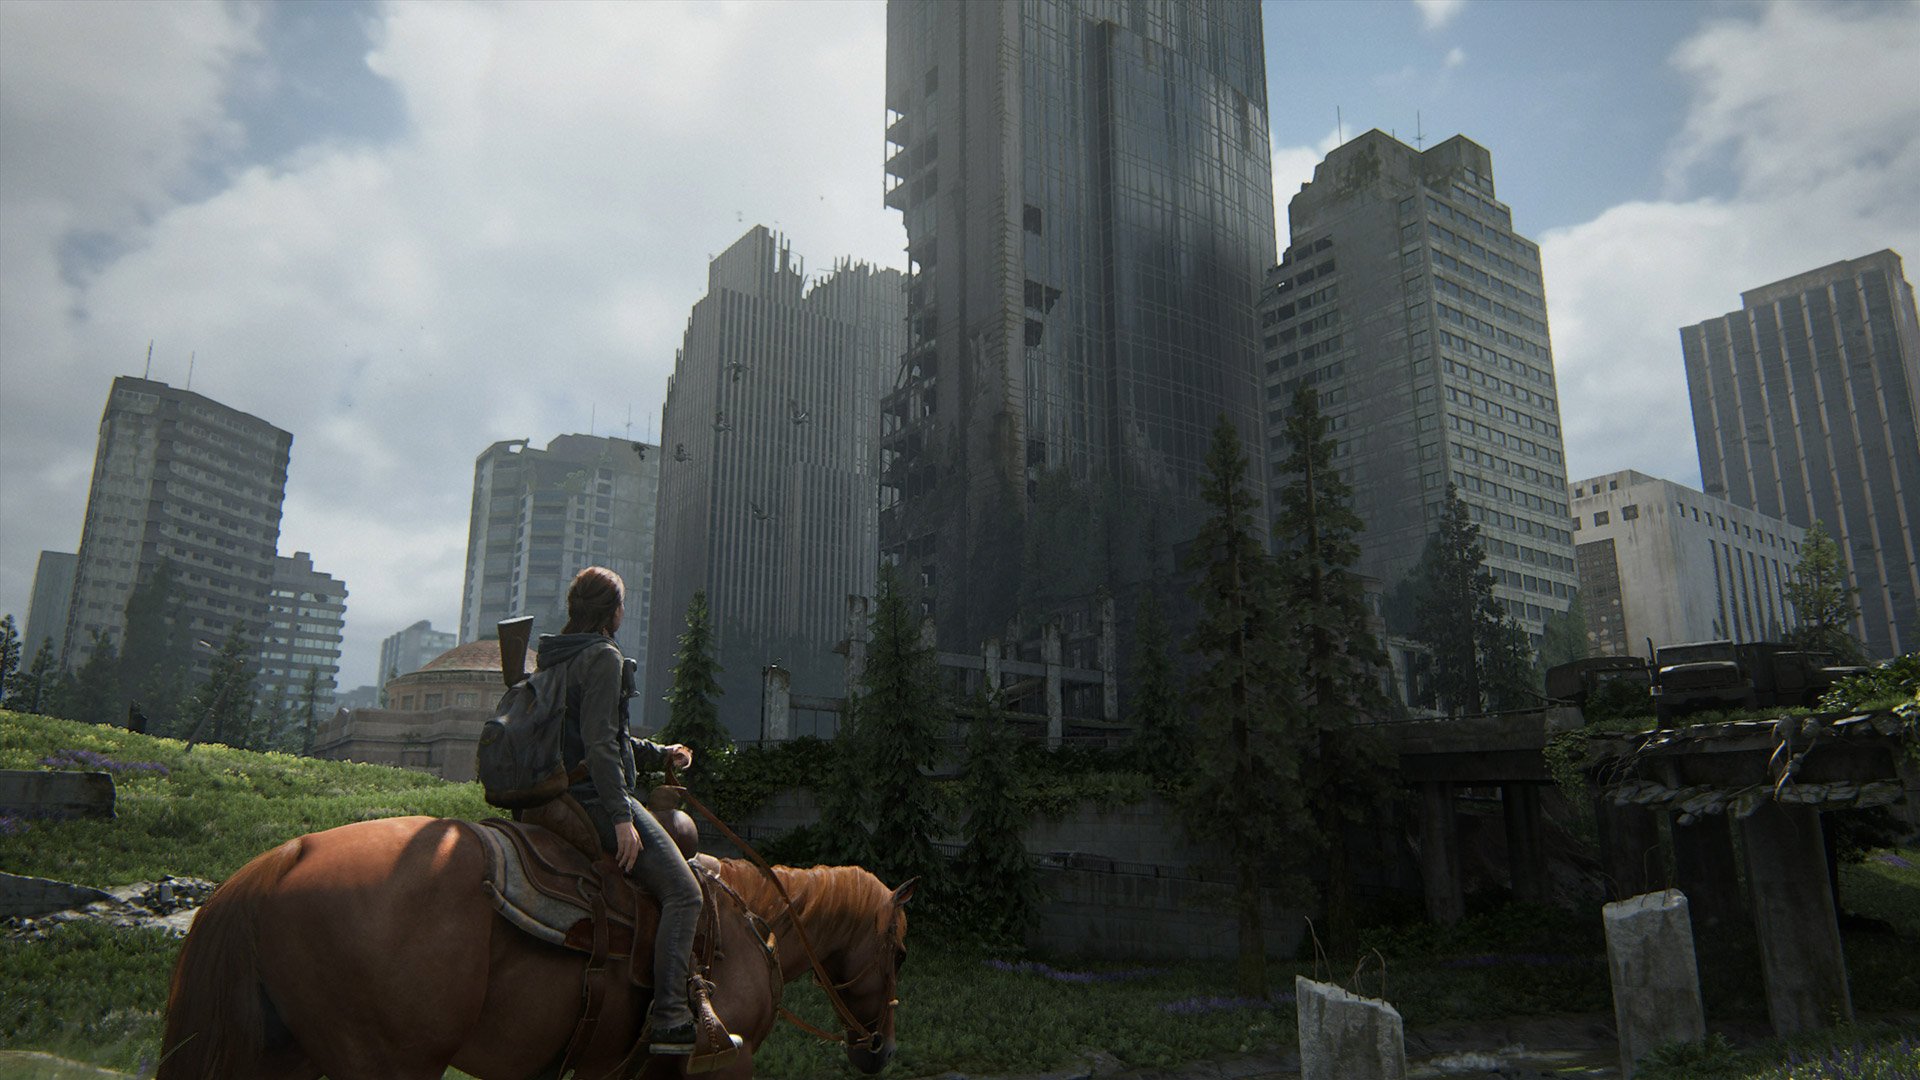 The Last Of Us 2: Remastered confirmed via LinkedIn profile